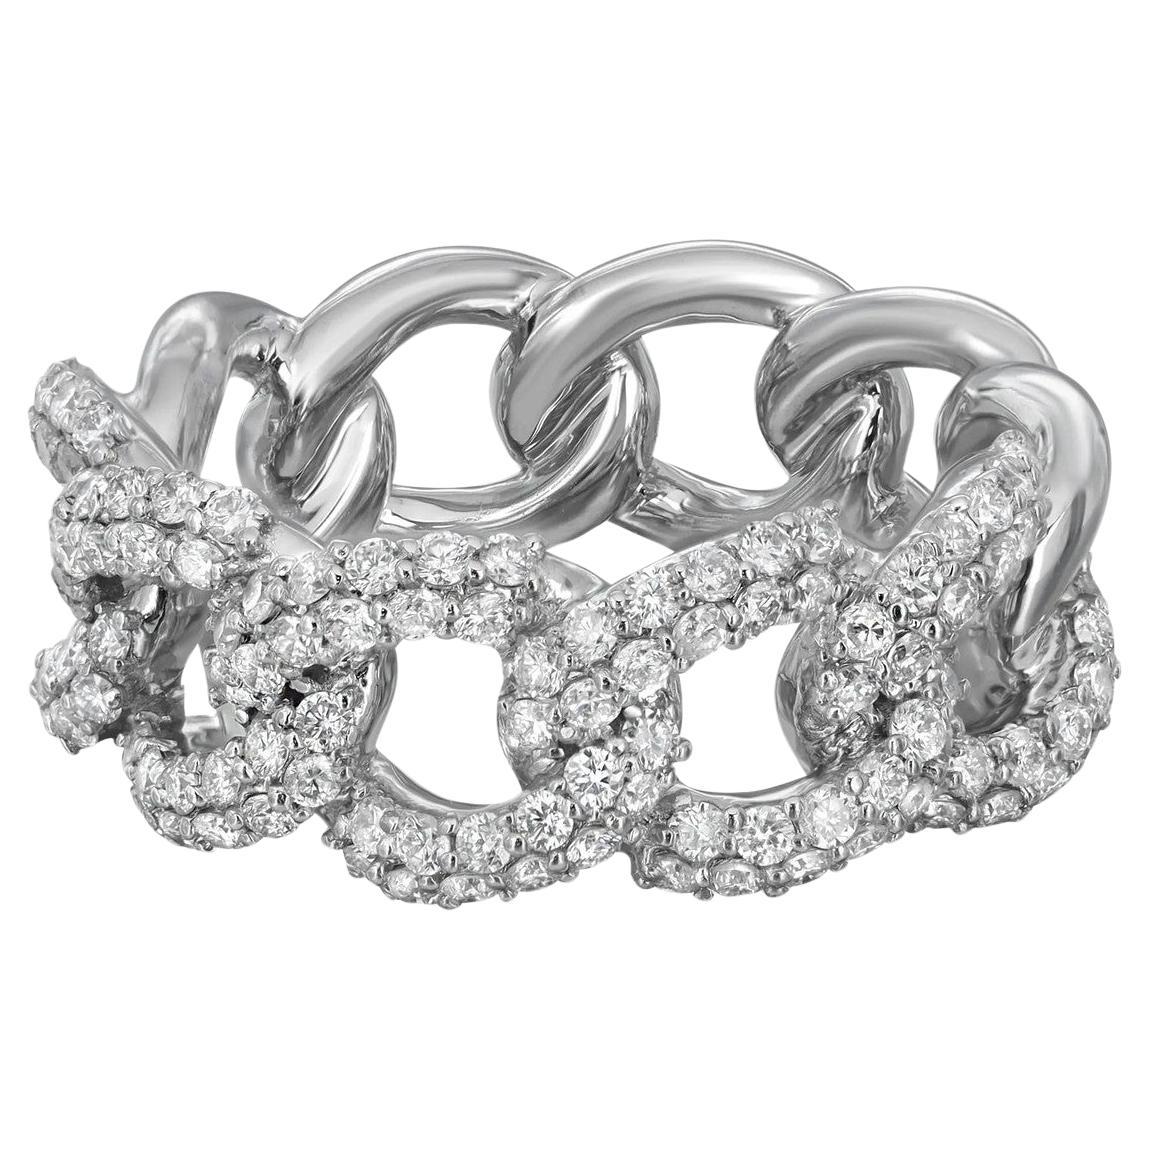 Elizabeth Fine Jewelry 1.00 Carat Diamond Chain Link Band Ring 18k White Gold